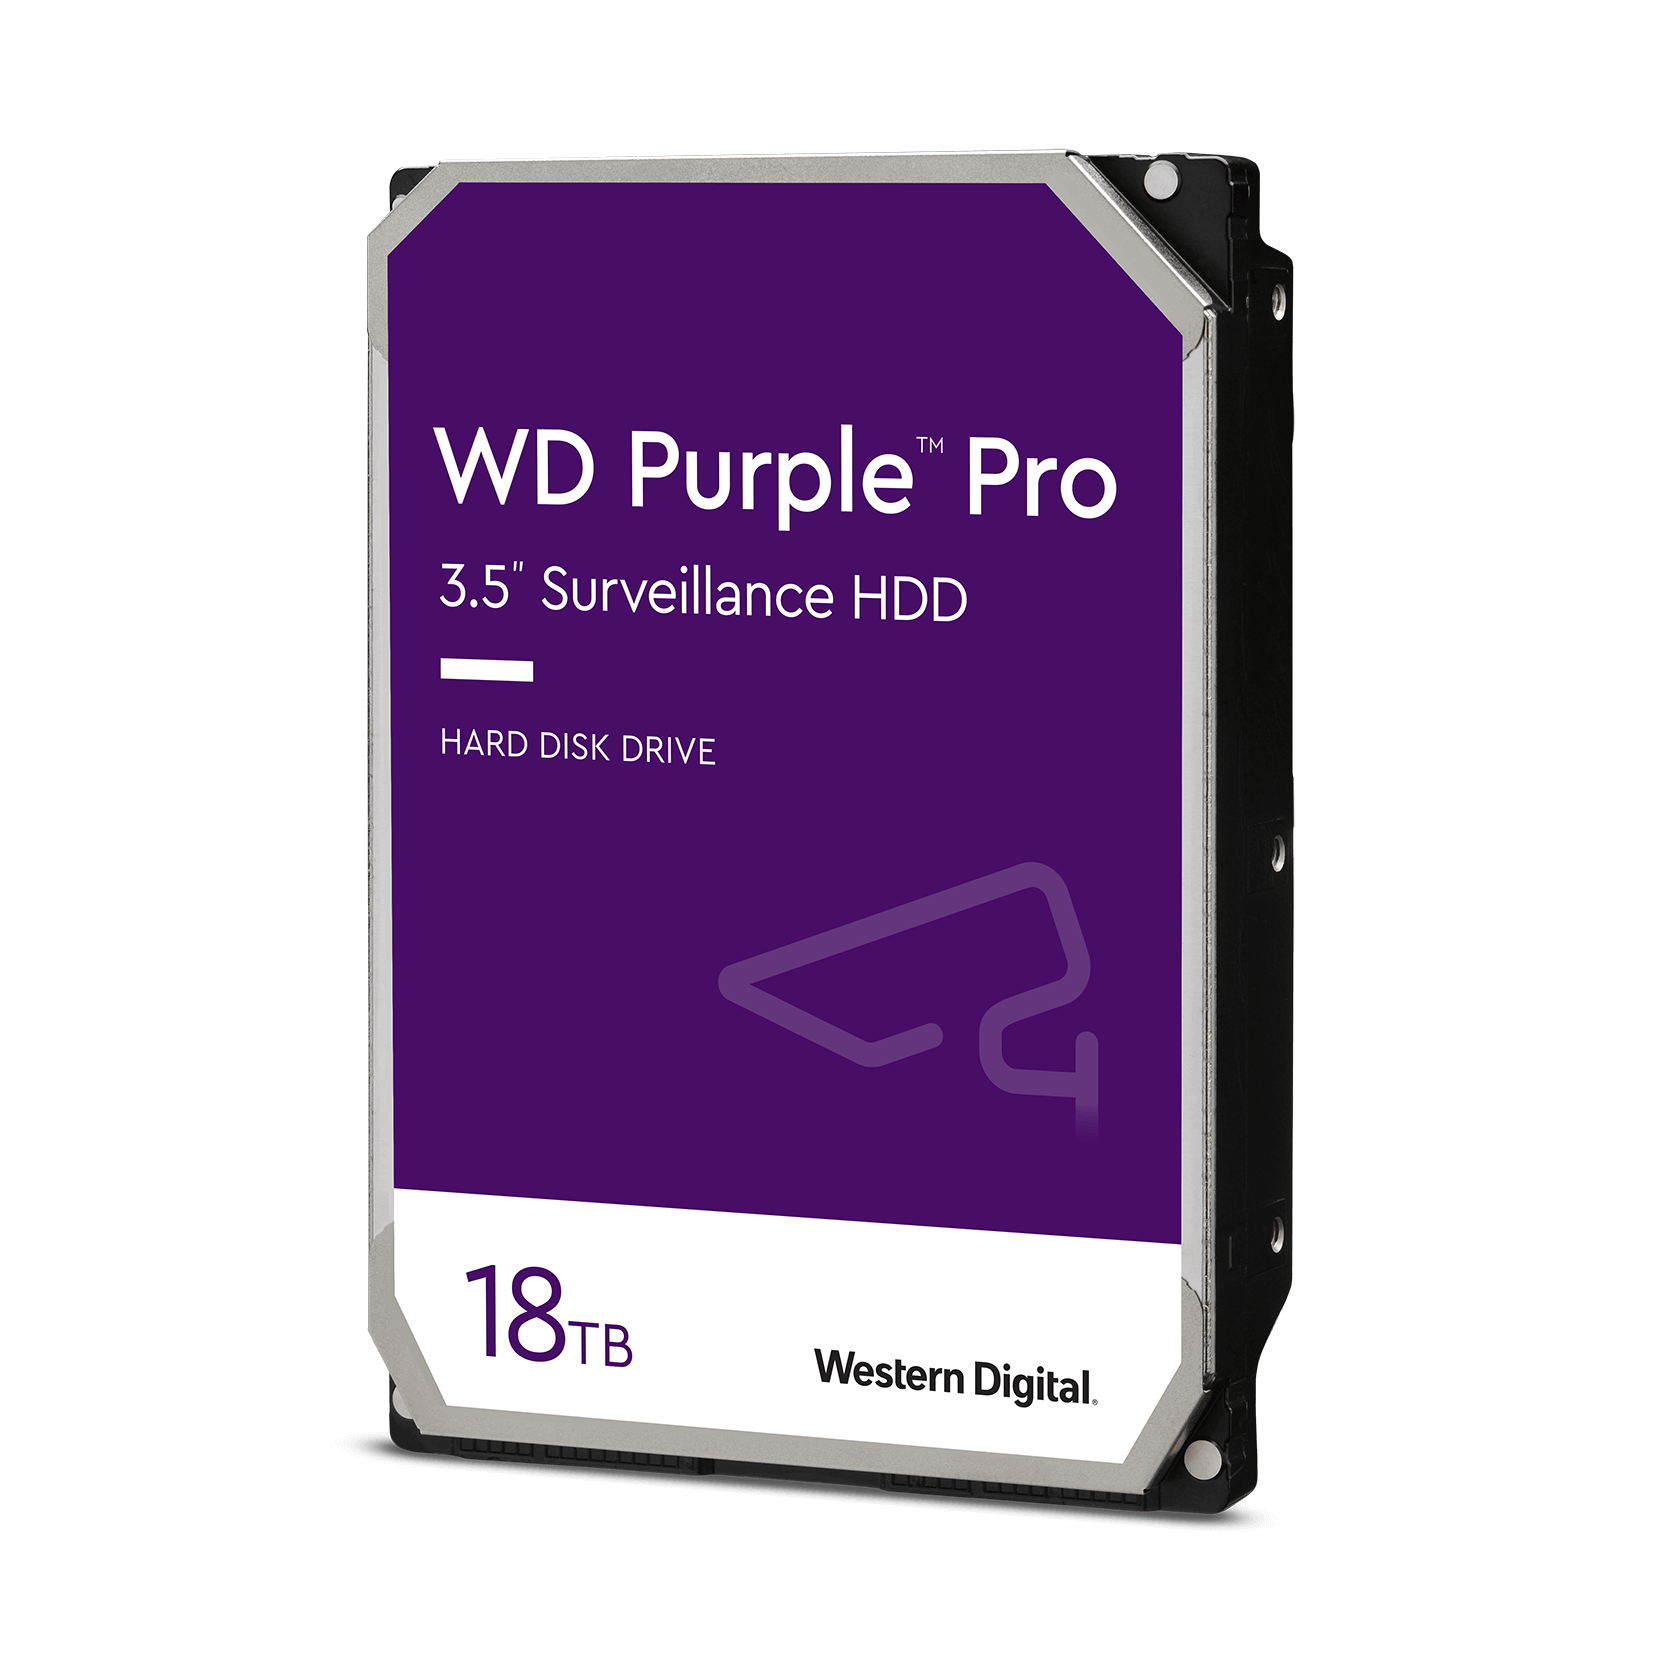 Western Digital 18TB WD Pro Surveillance, Purple, Storage System - WD181PURP